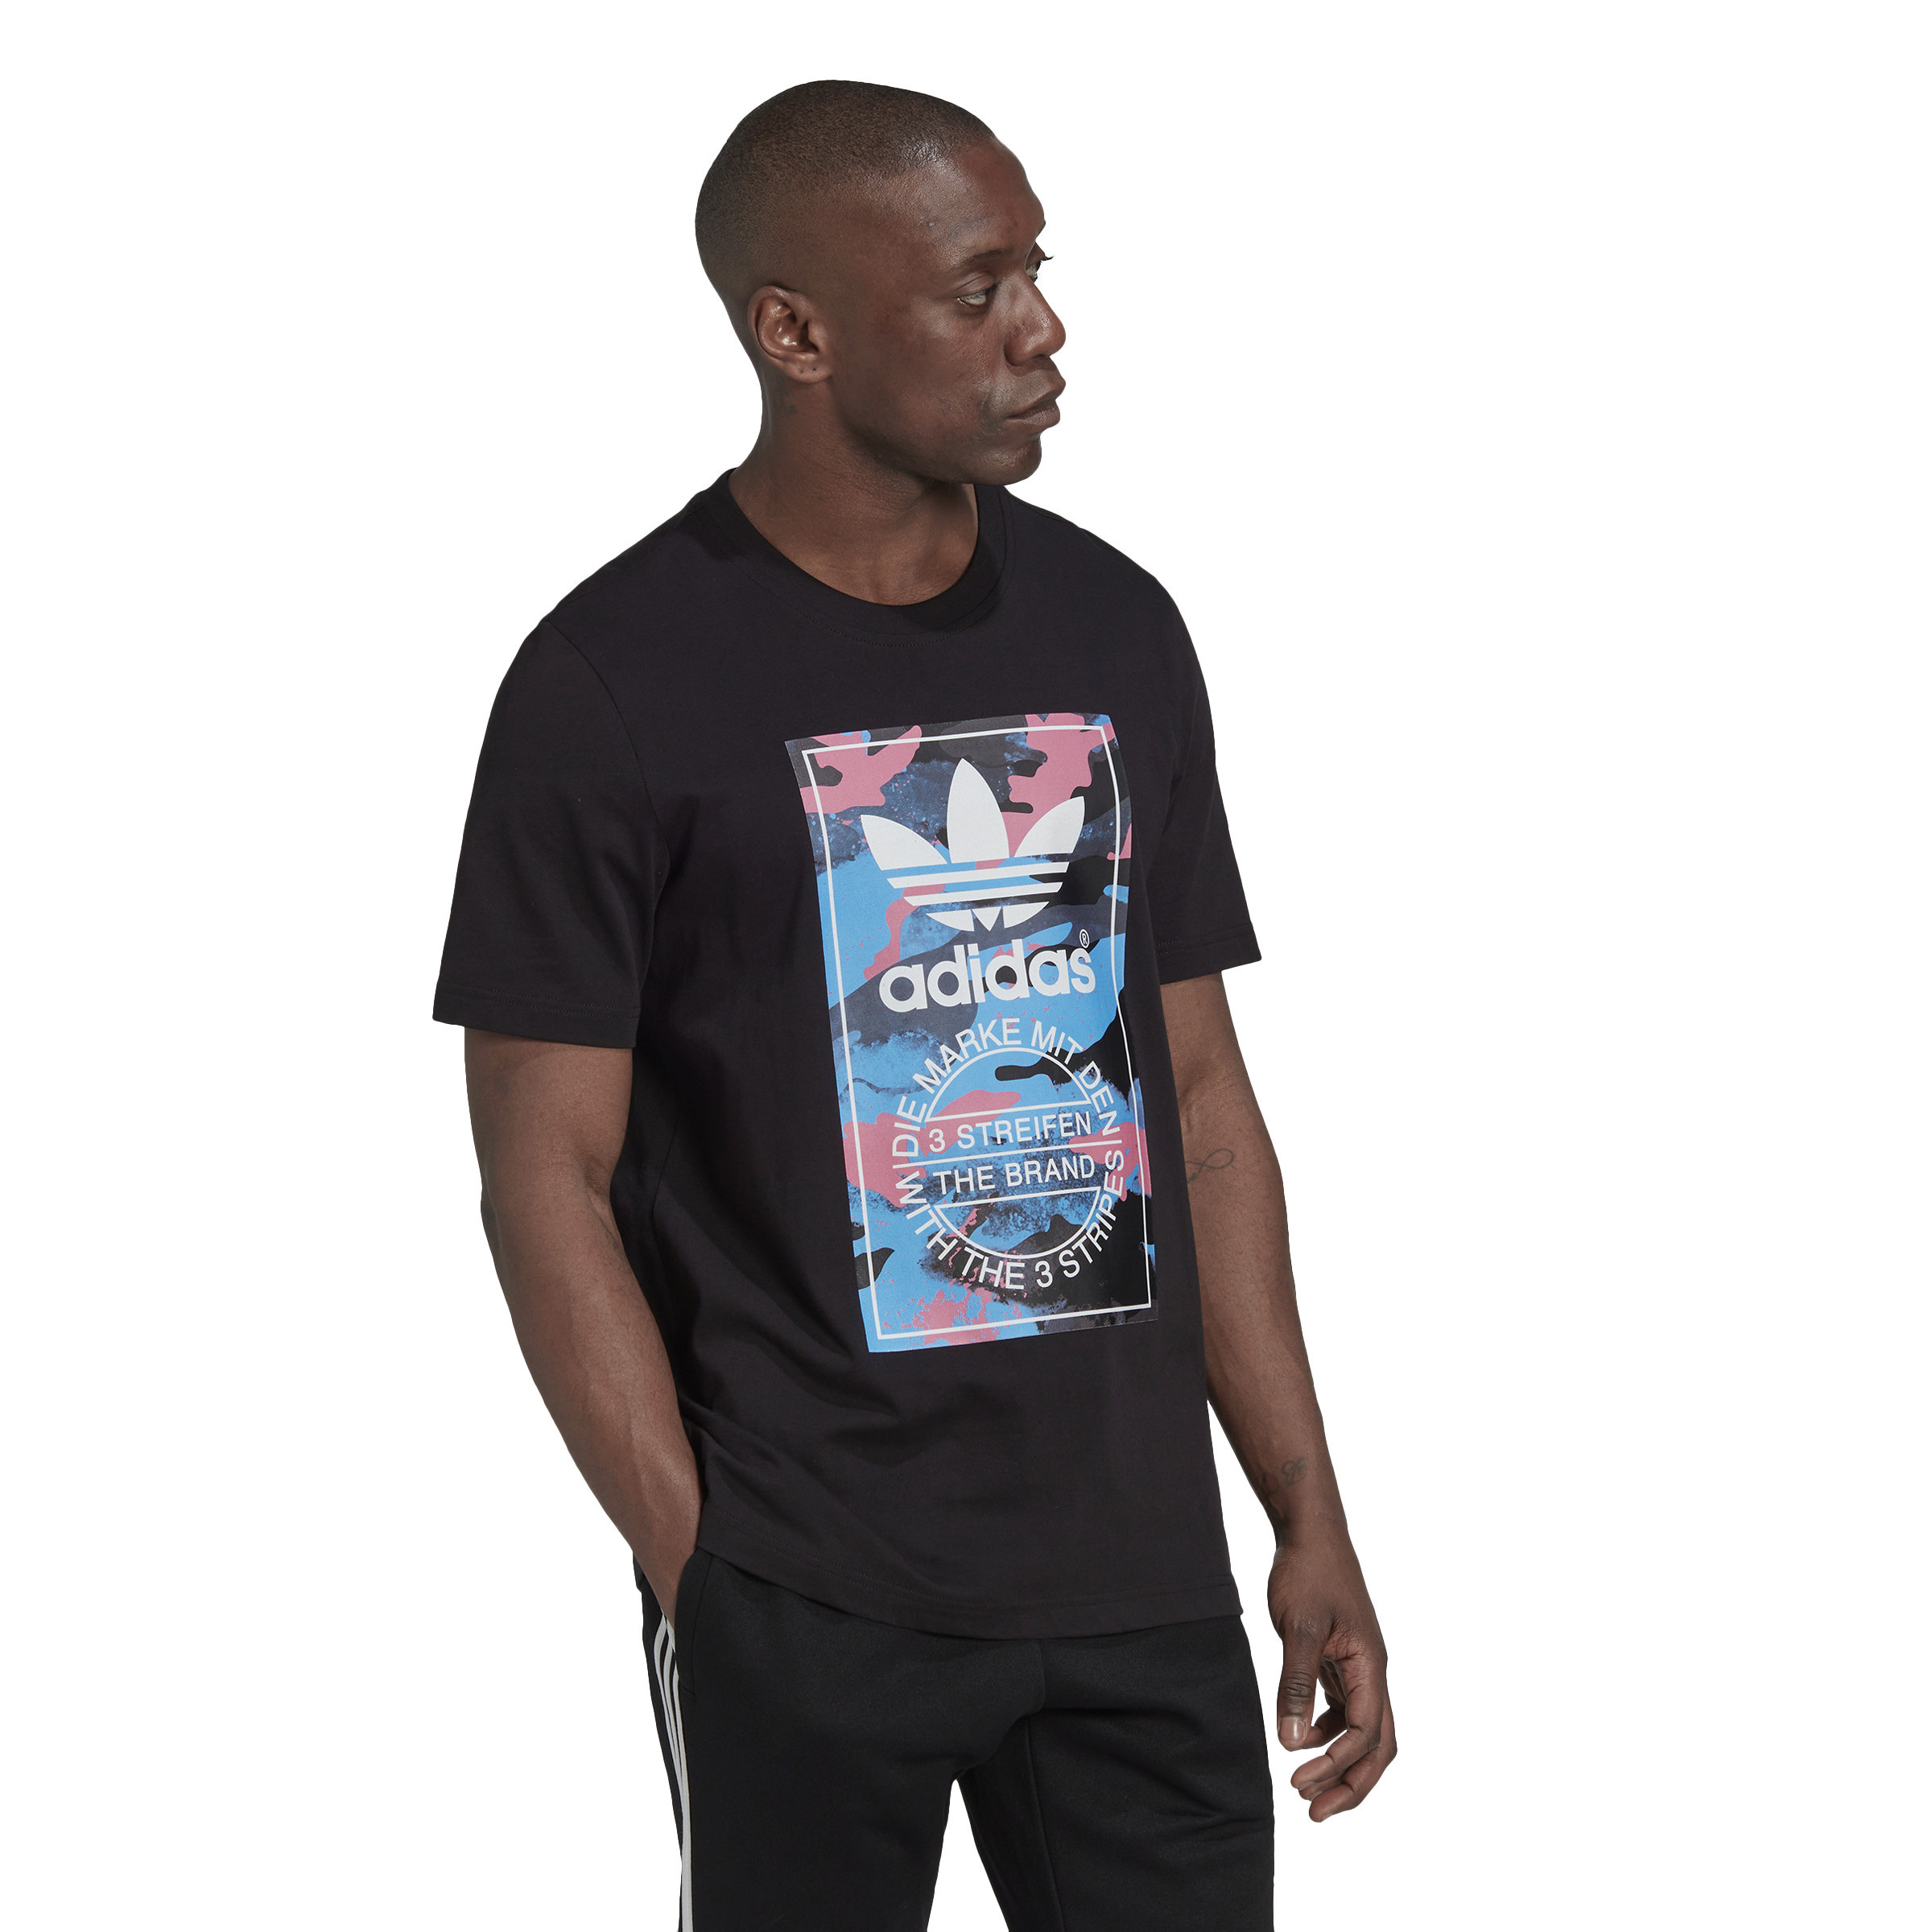 Adidas - Graphic Camo T-shirt, Black, large image number 5